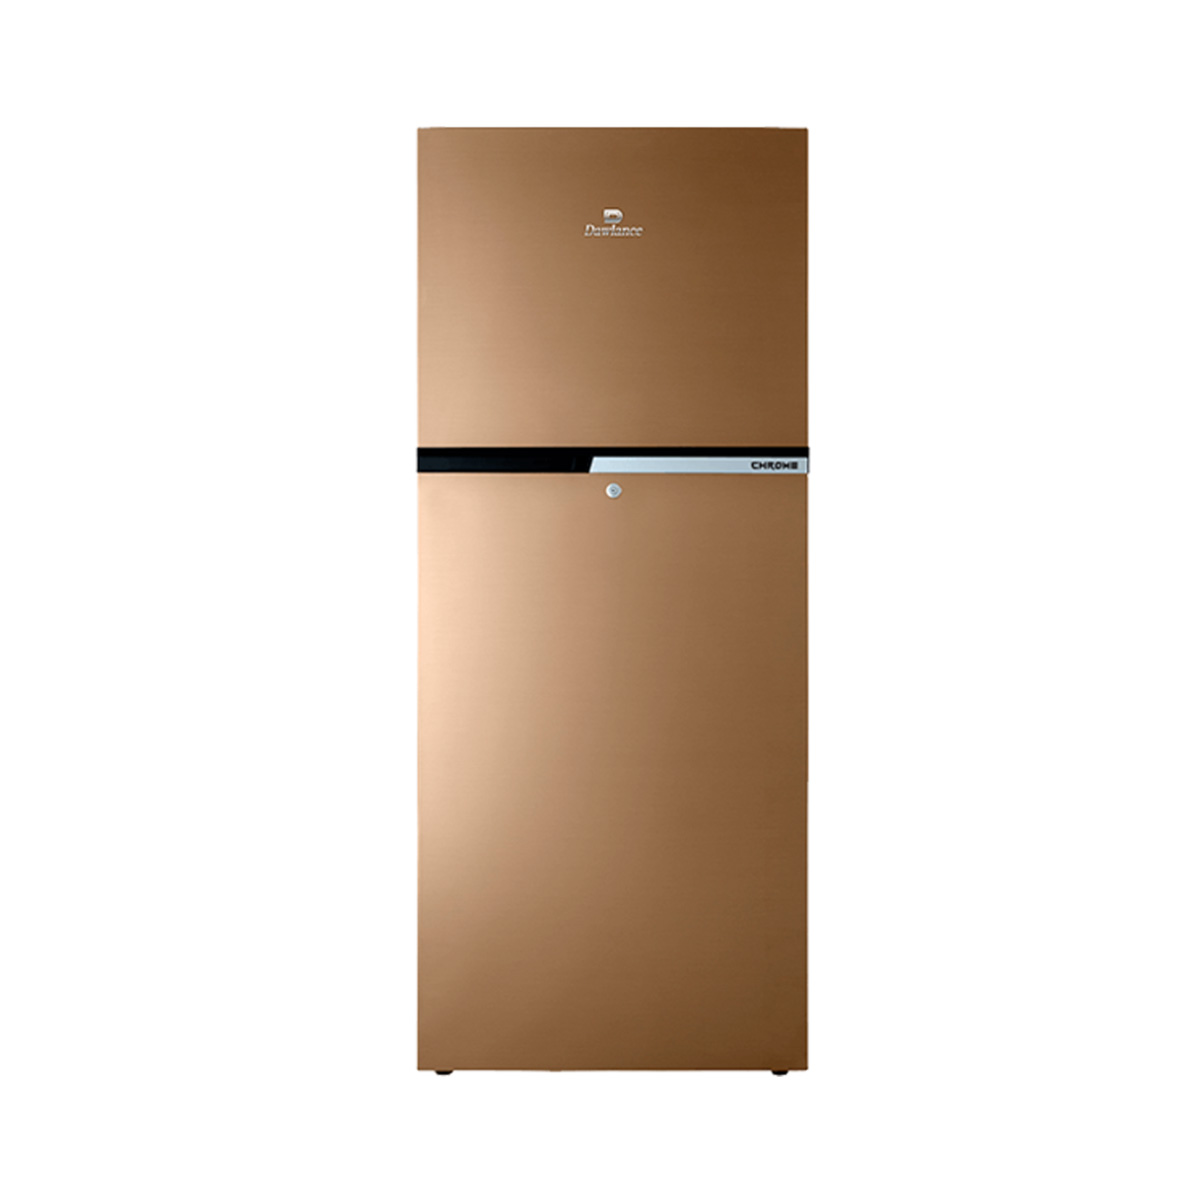 Dawlance Refrigerator 9169 Chrome Pearl Copper